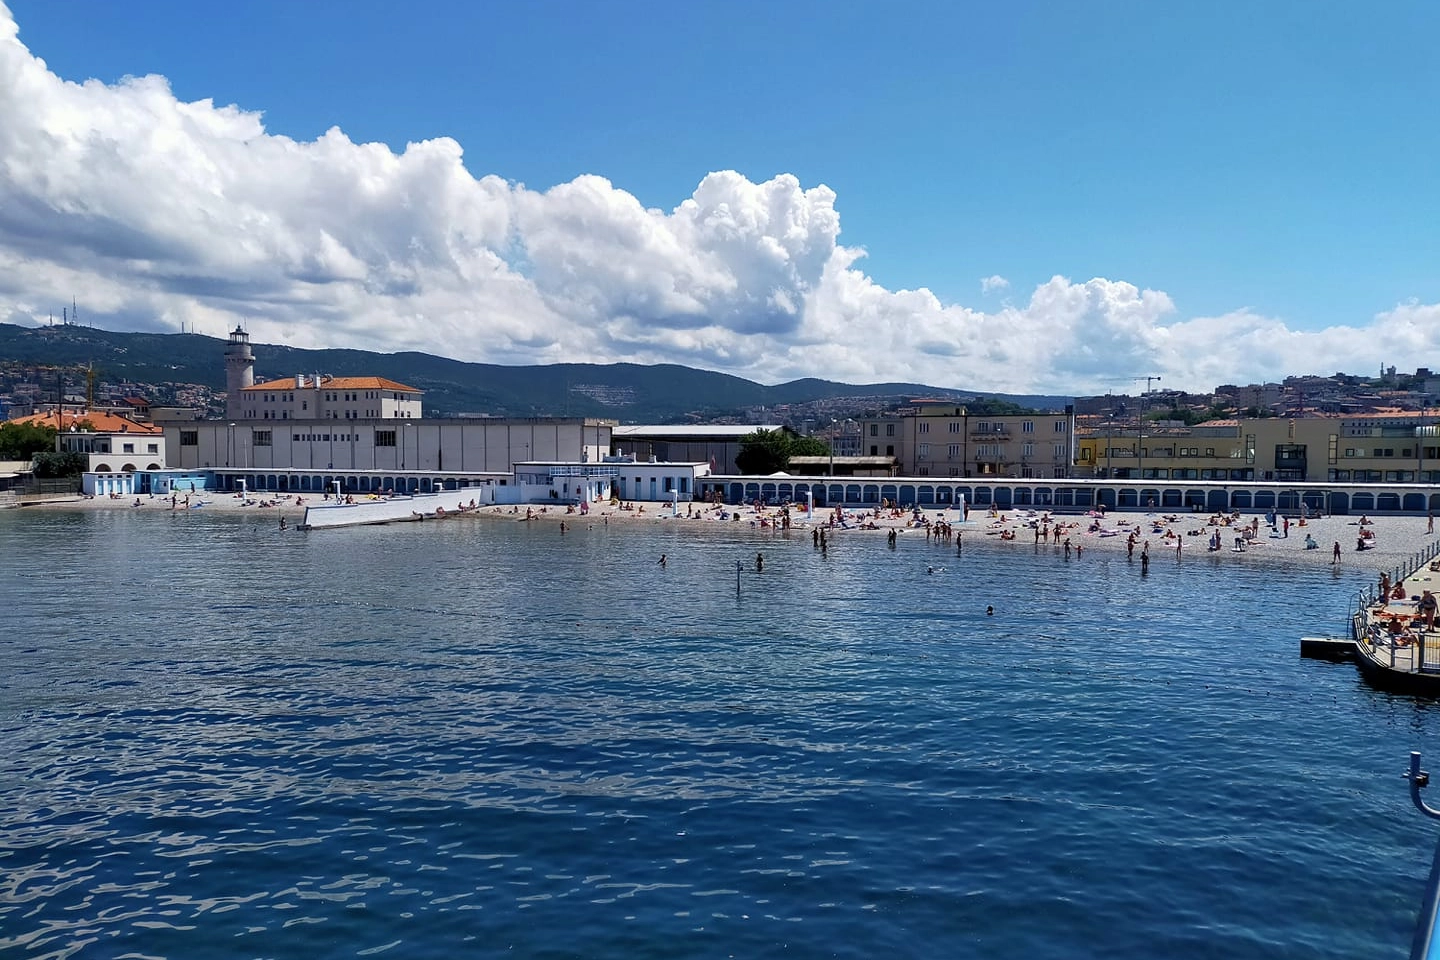 Spiaggia ‘El pedocin’ a Trieste